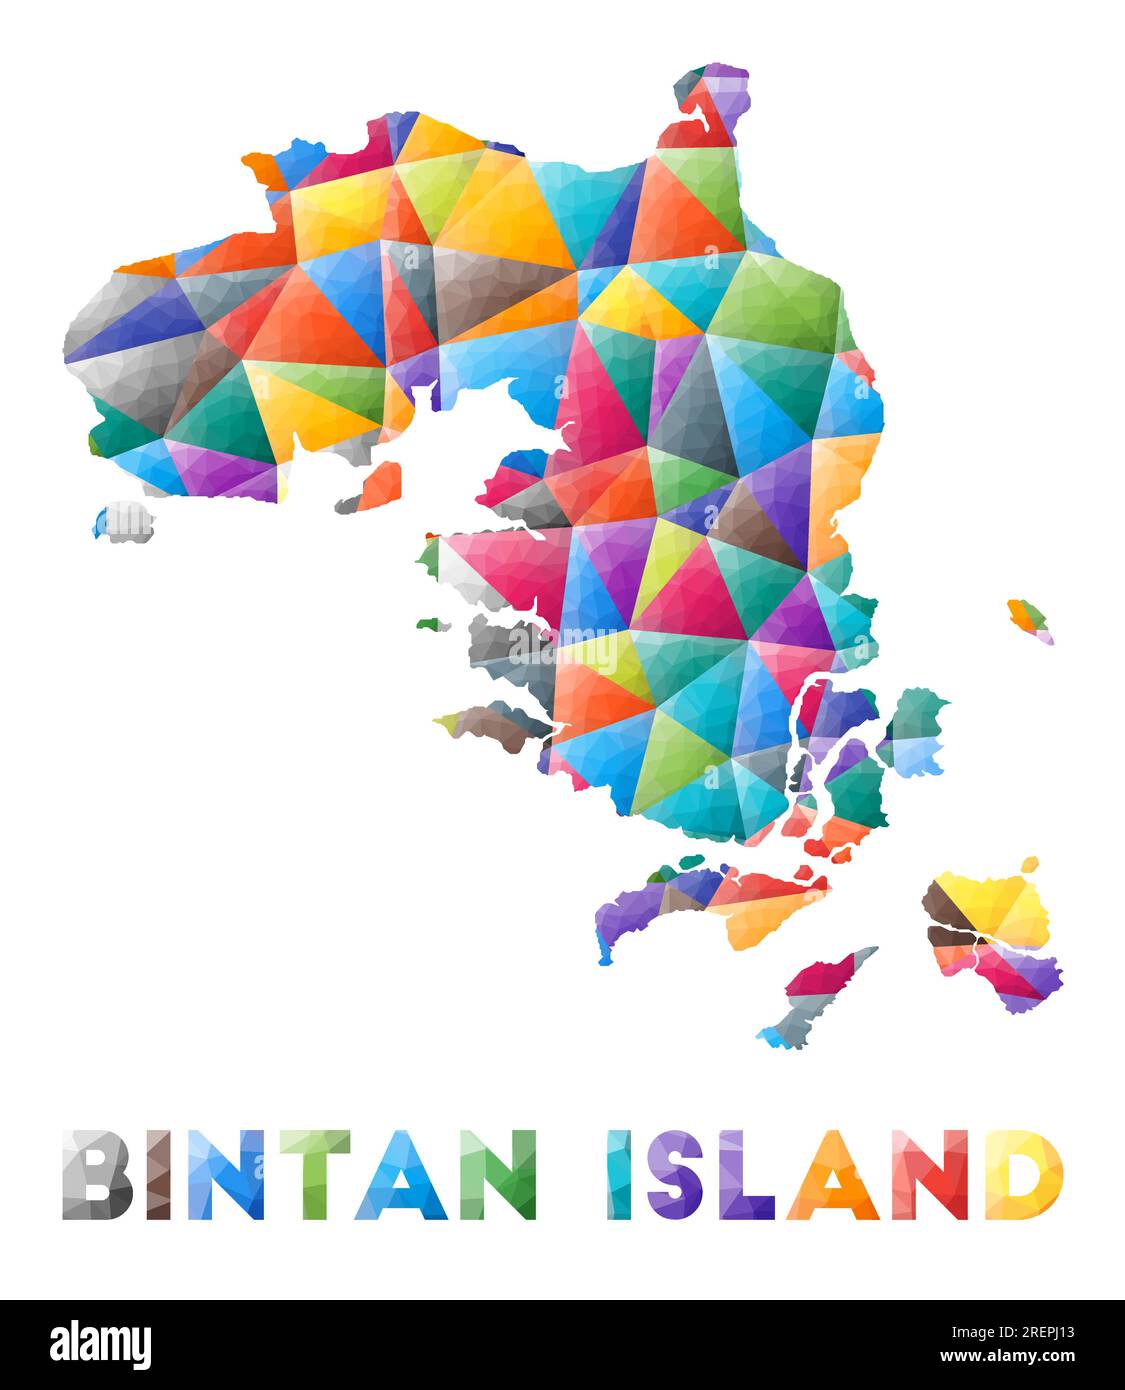 Bintan Island - farbenfrohe niedrige Poly-Insel-Form. Mehrfarbige geometrische Dreiecke. Modernes, trendiges Design. Vektordarstellung. Stock Vektor